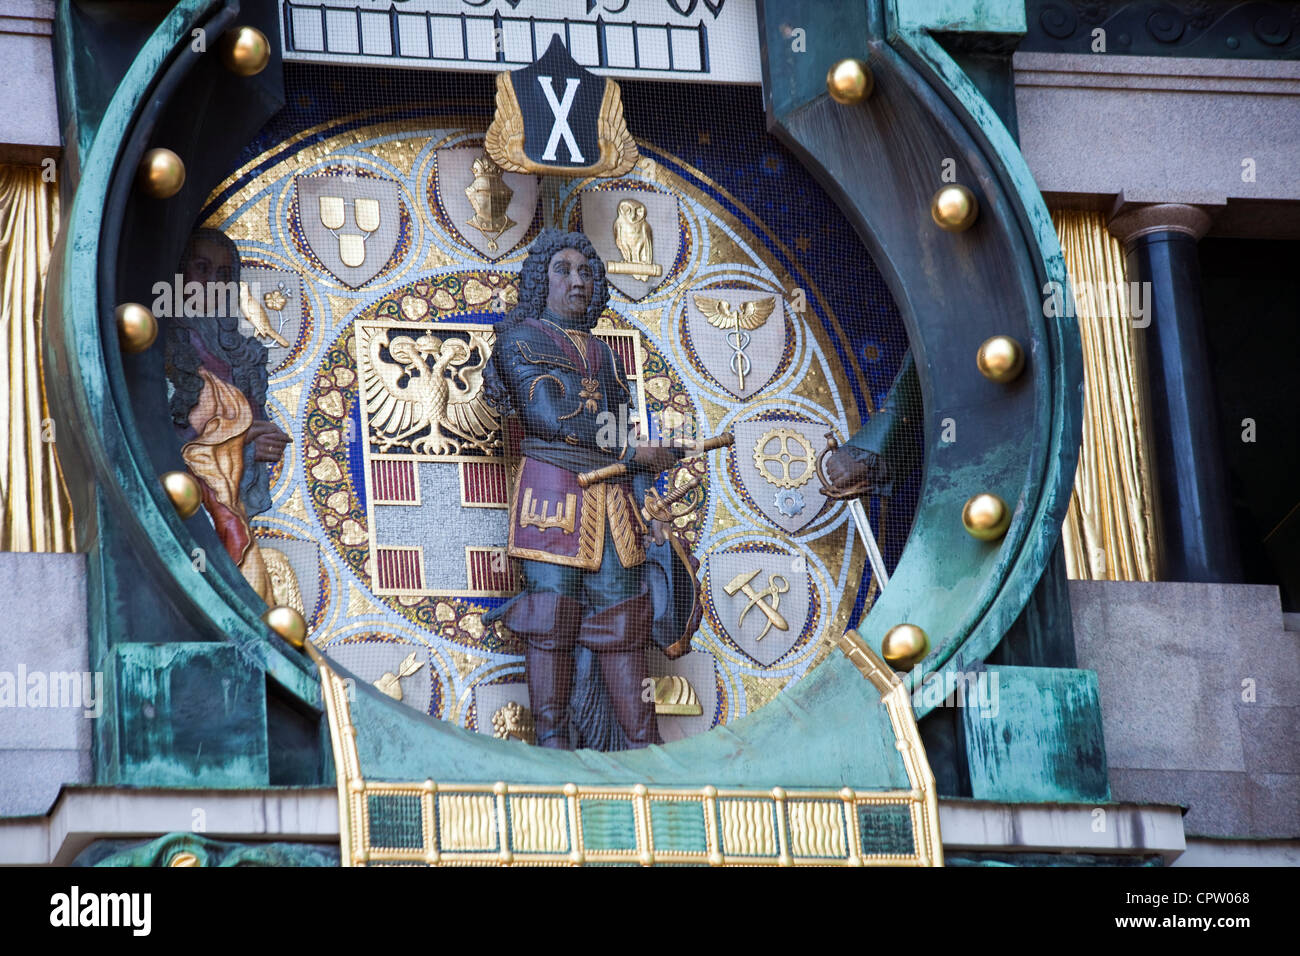 The Anker Uhr, Anchor, clock in Vienna, Austria Stock Photo - Alamy